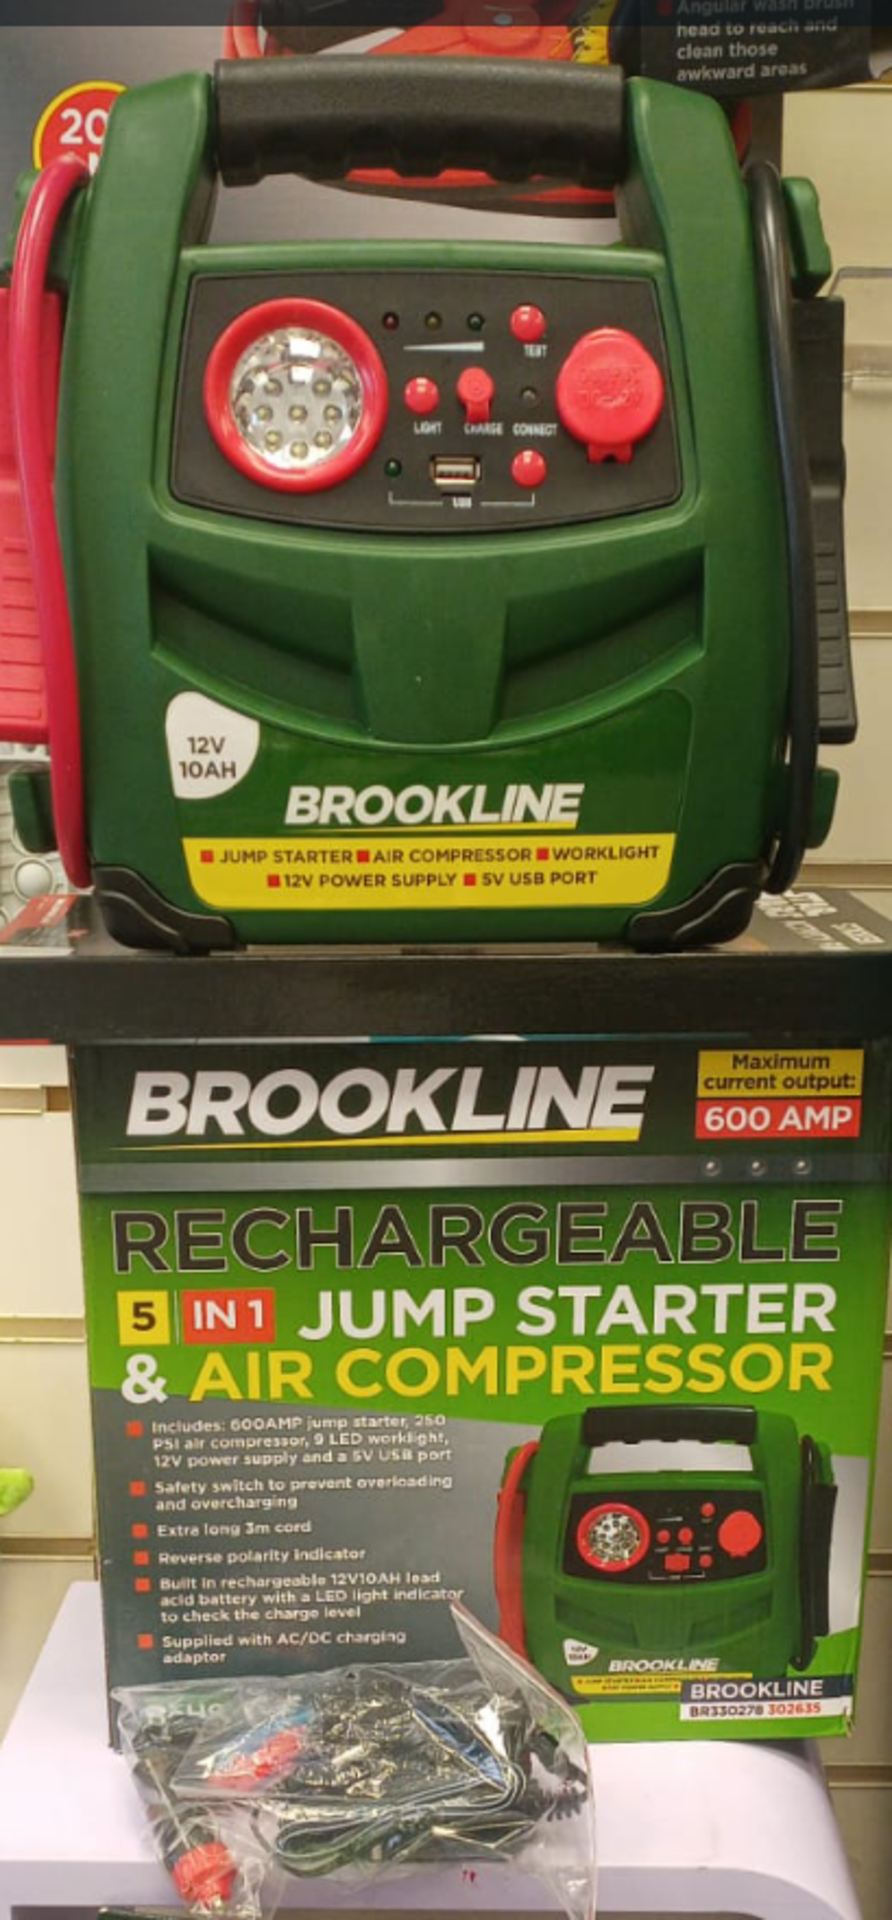 10 x Brookline 5-in-1 Jumpstarter & Compressor | Total RRP £600 - Image 2 of 4